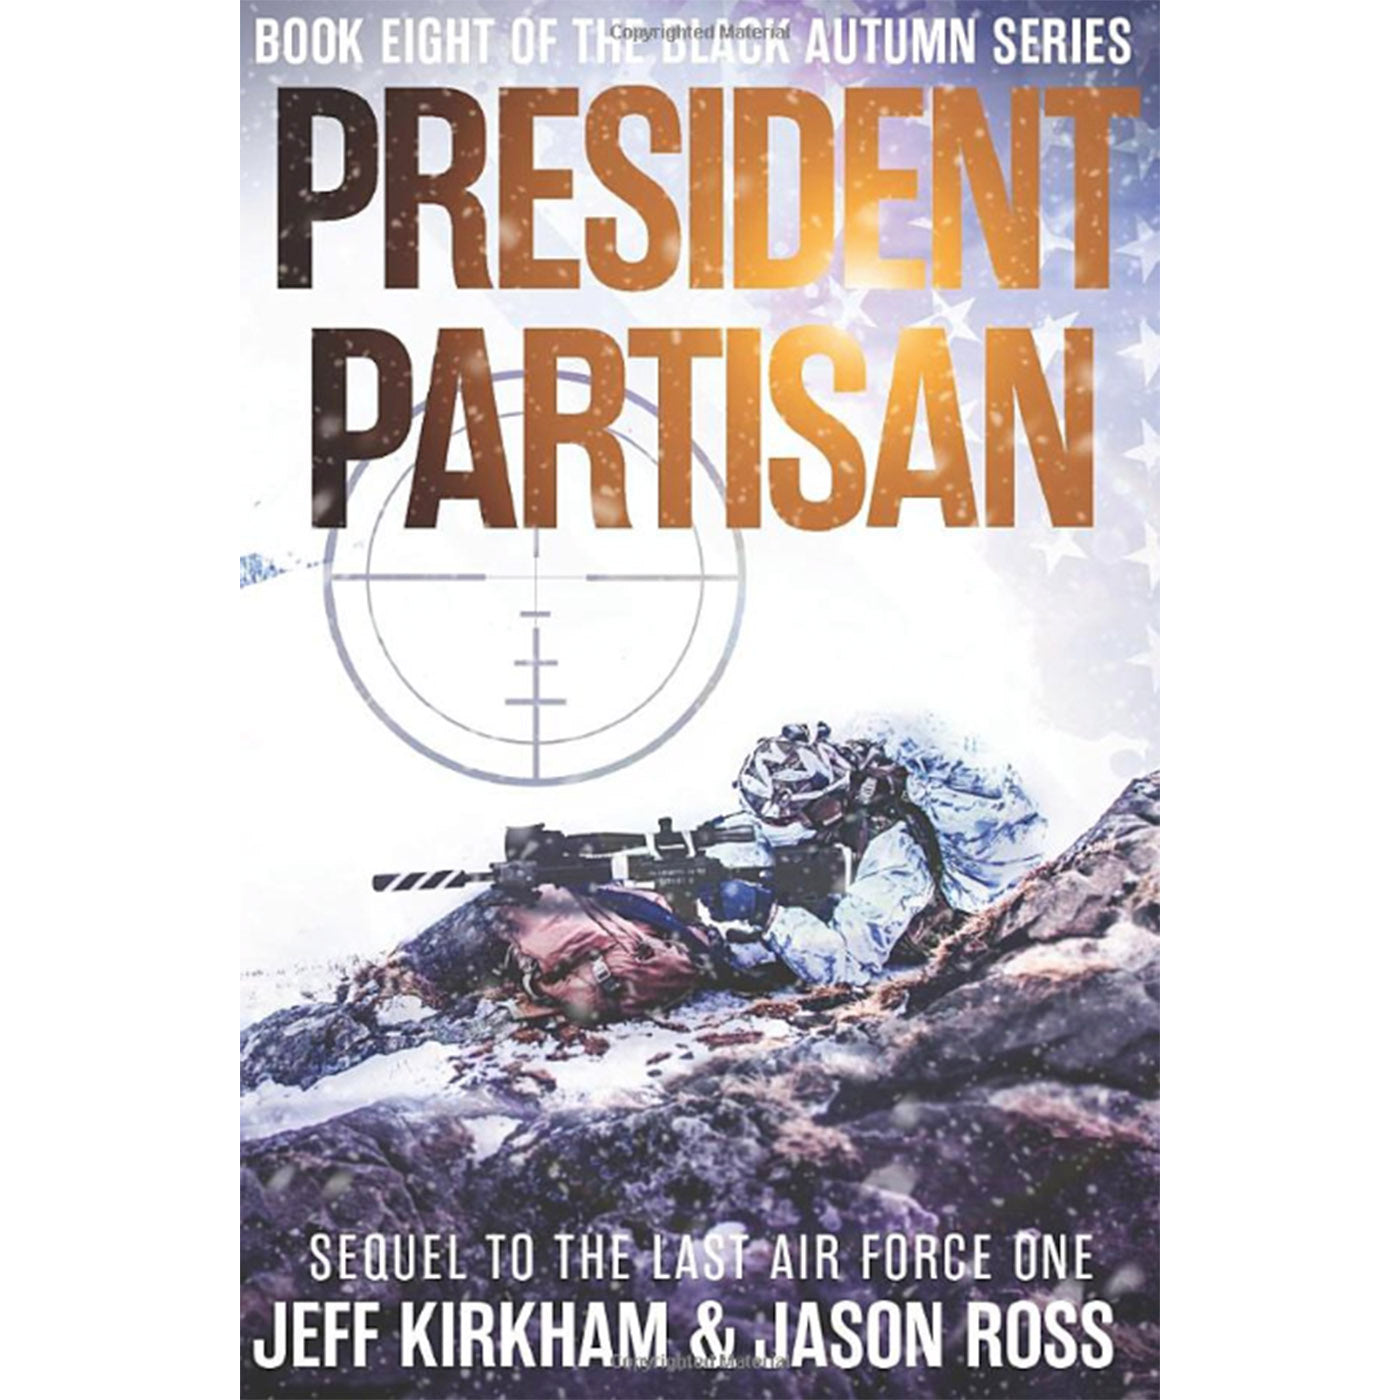 President Partisan: A Black Autumn Saga Sequel (The Black Autumn Series Book 8)